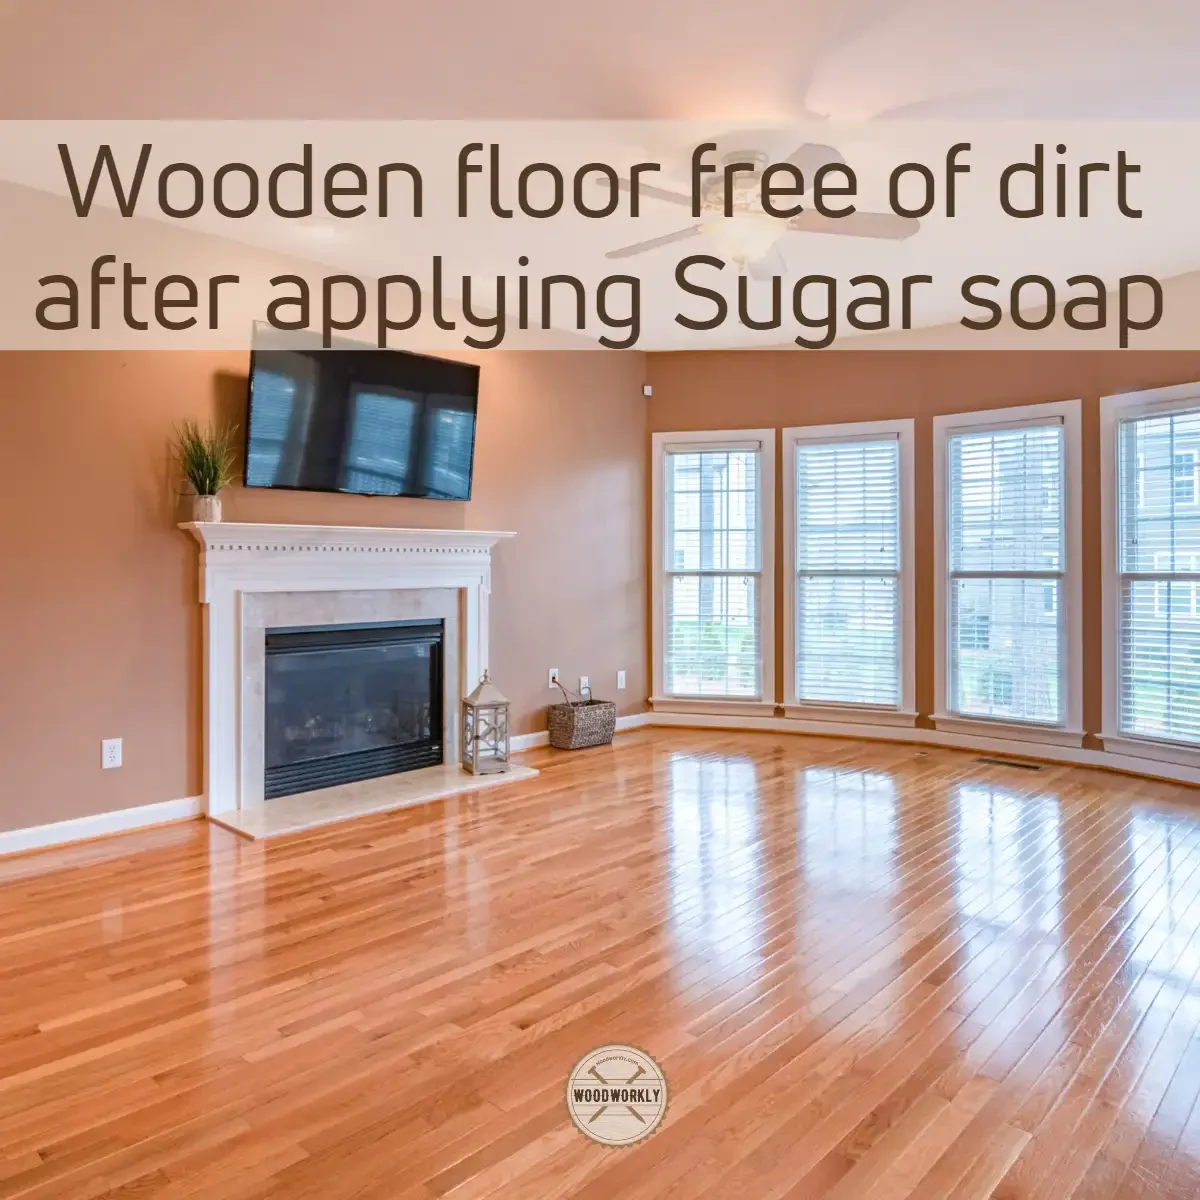 Wooden floor free of dirt after applying Sugar soap